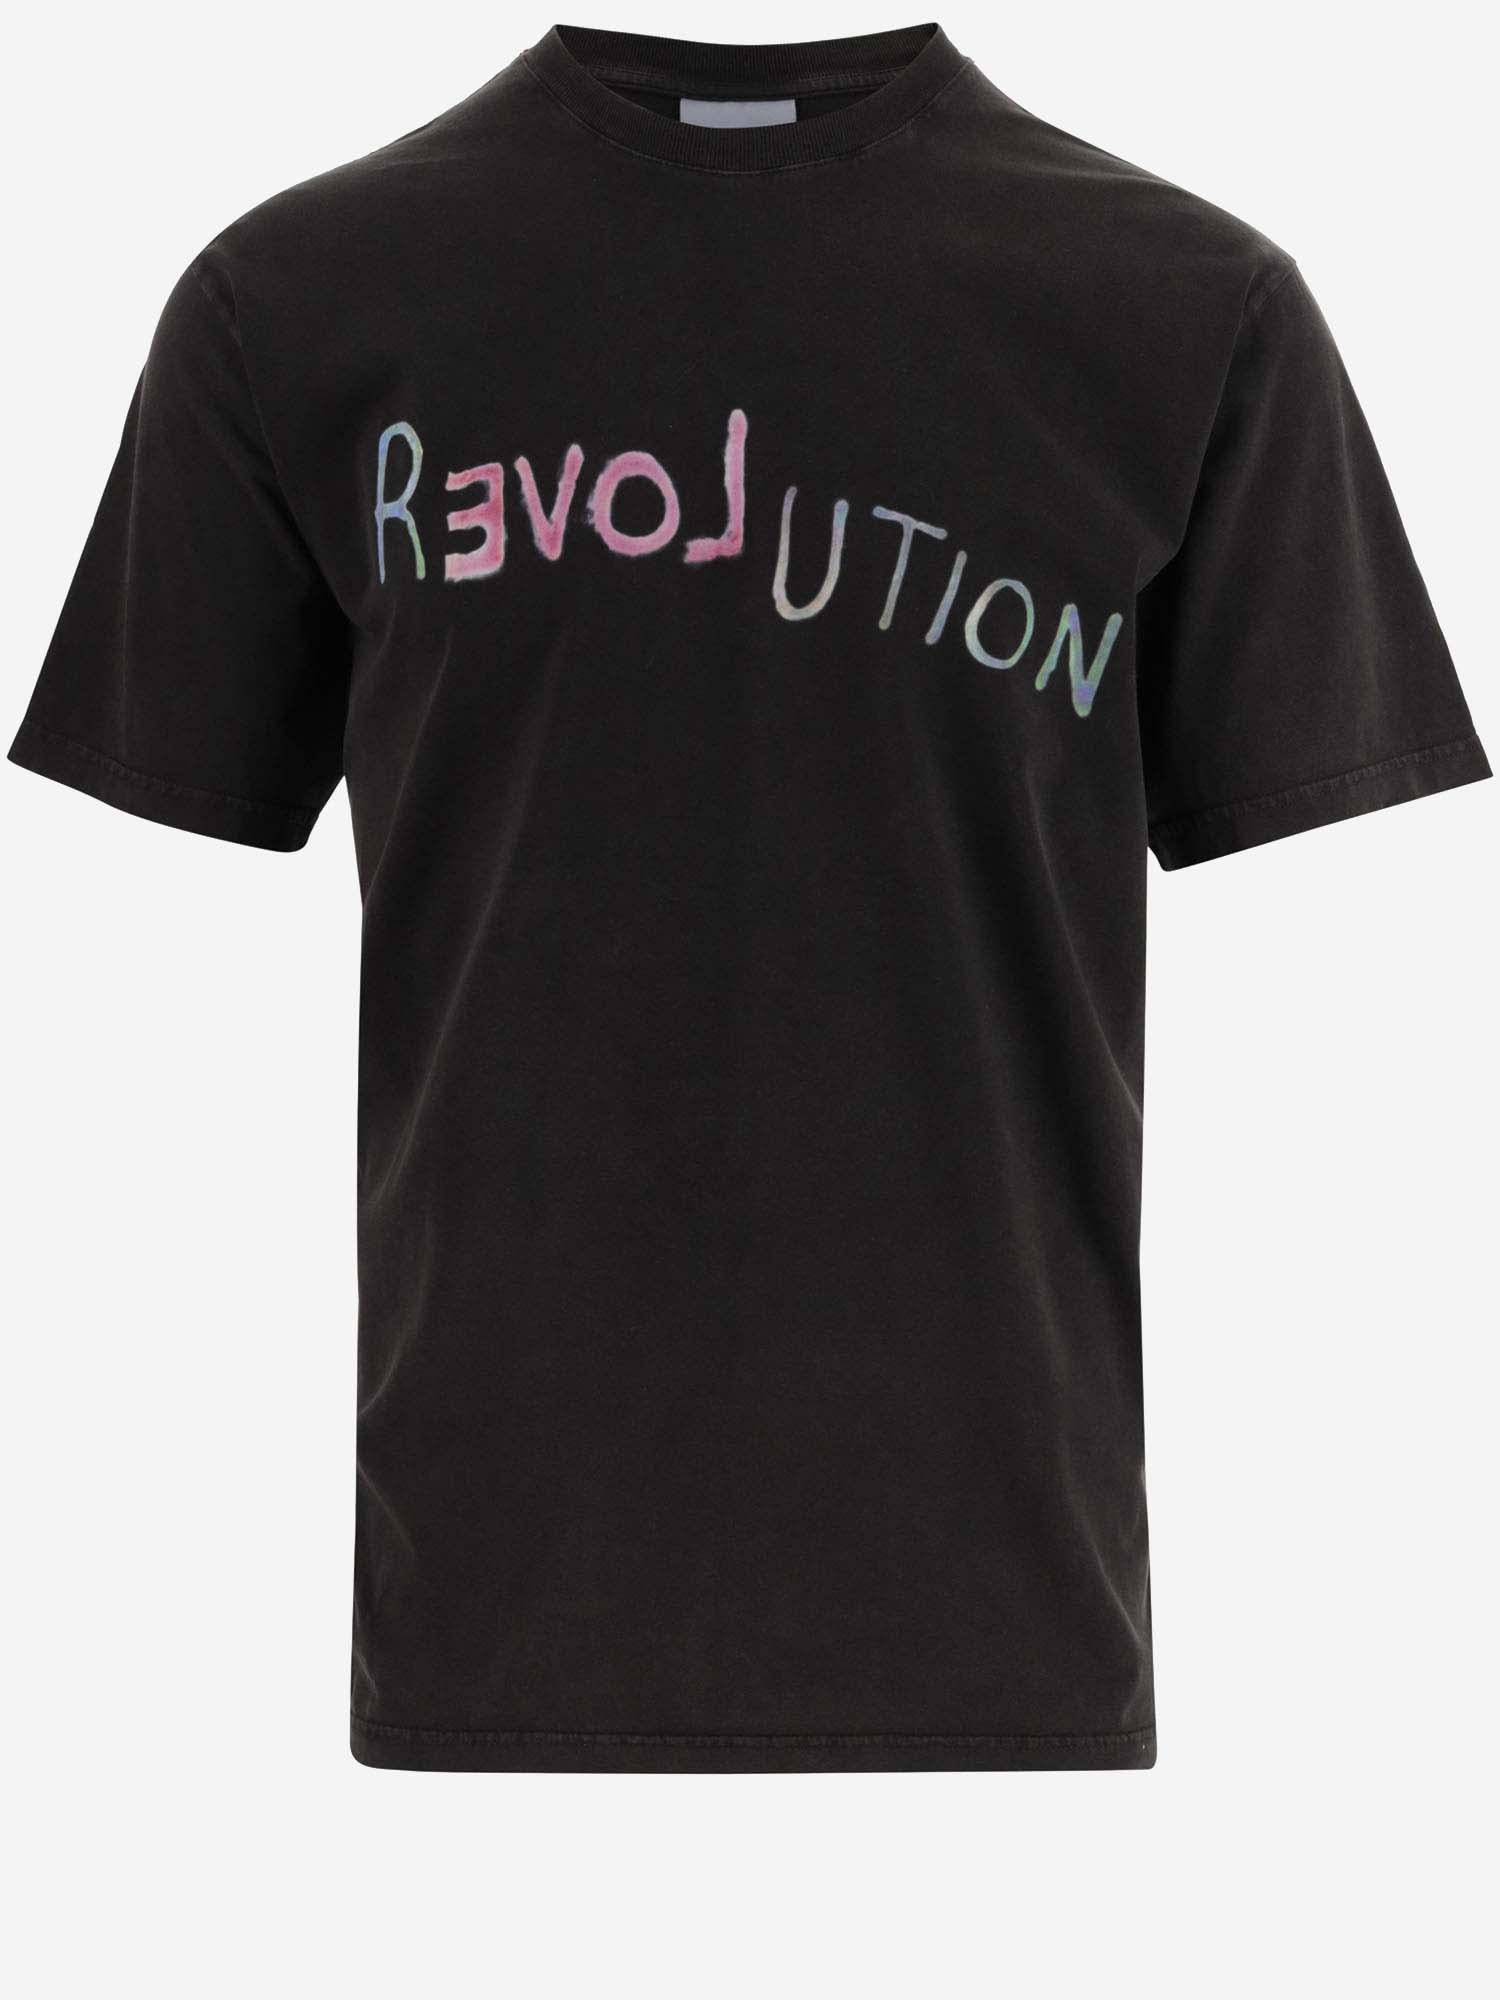 Revolution Cotton T-shirt